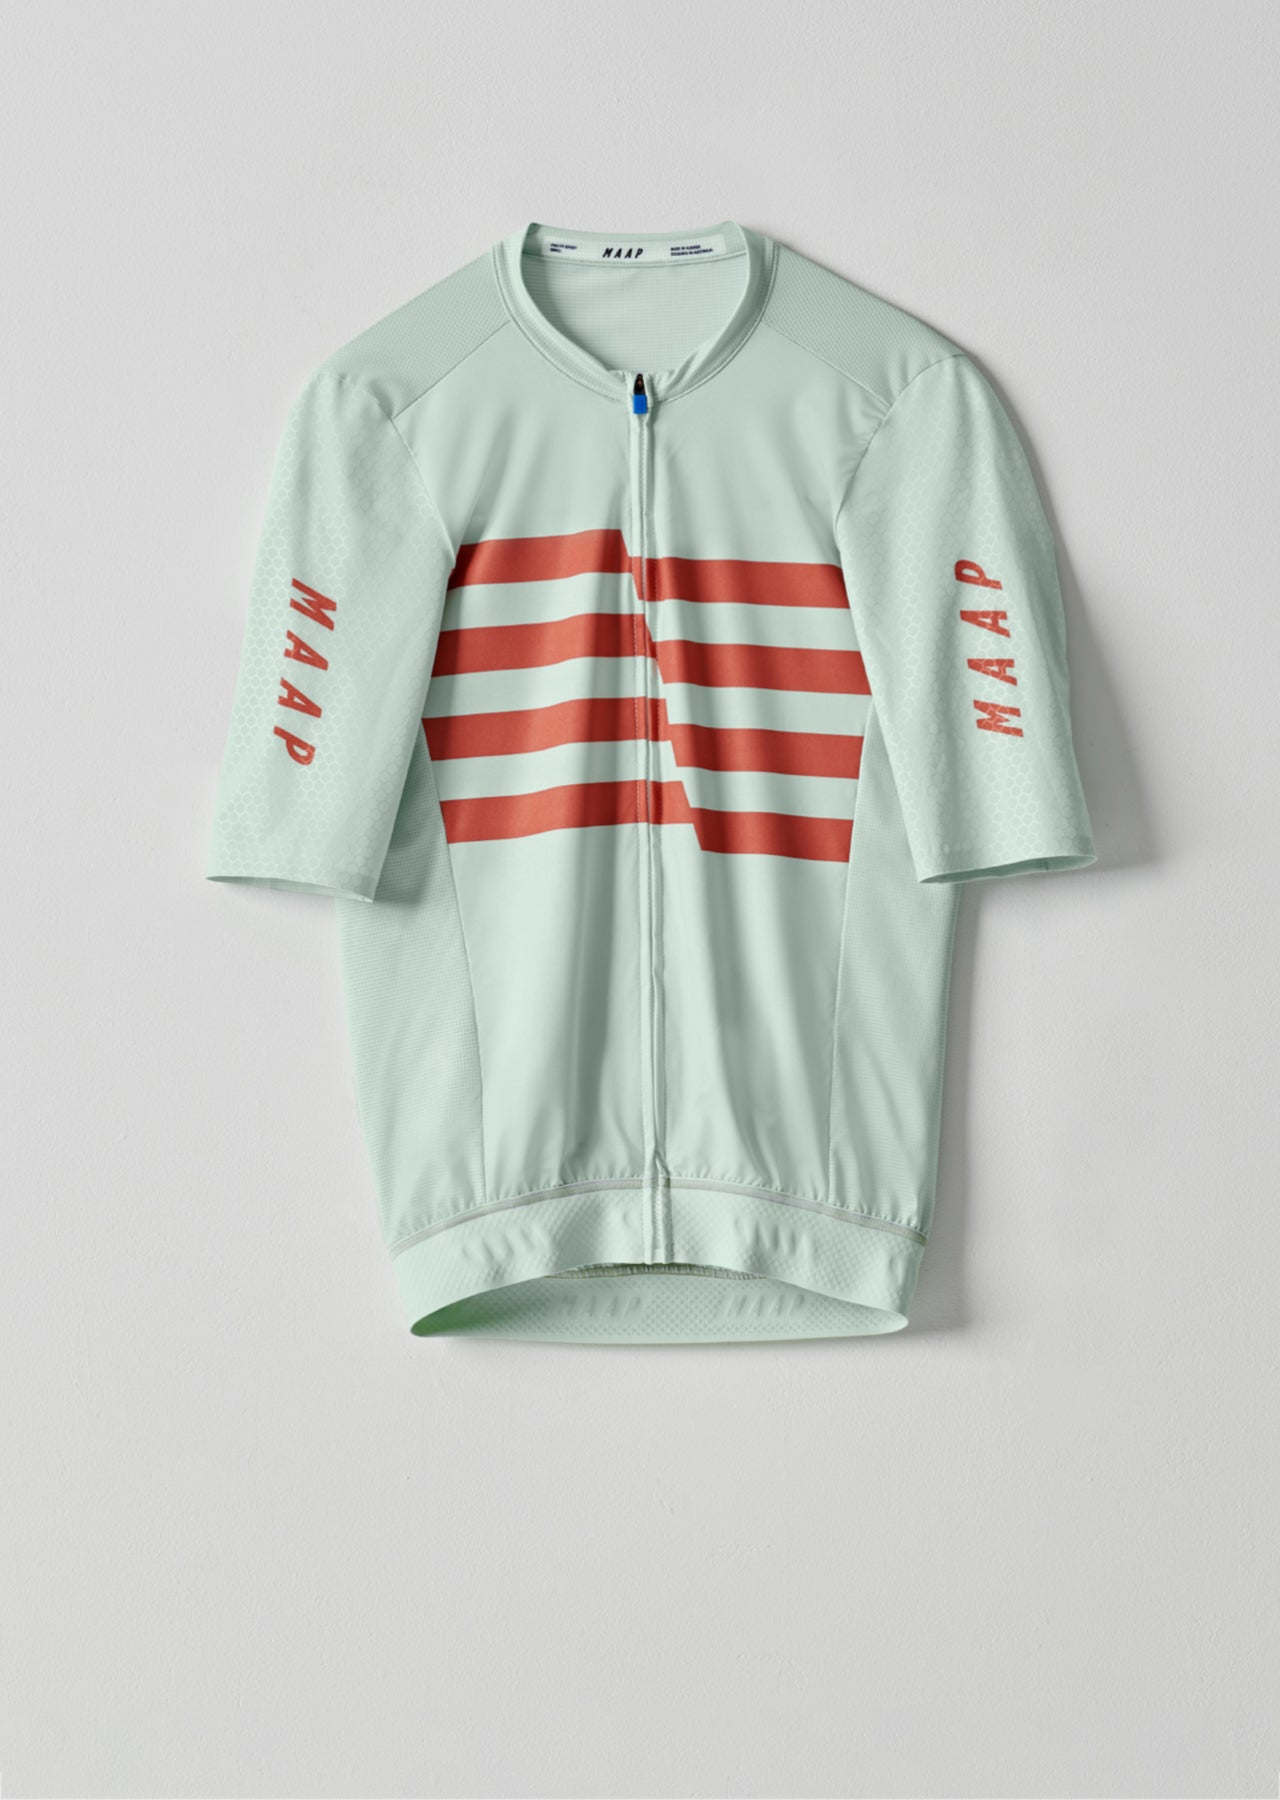 Emblem Pro Hex Jersey - MAAP Cycling Apparel